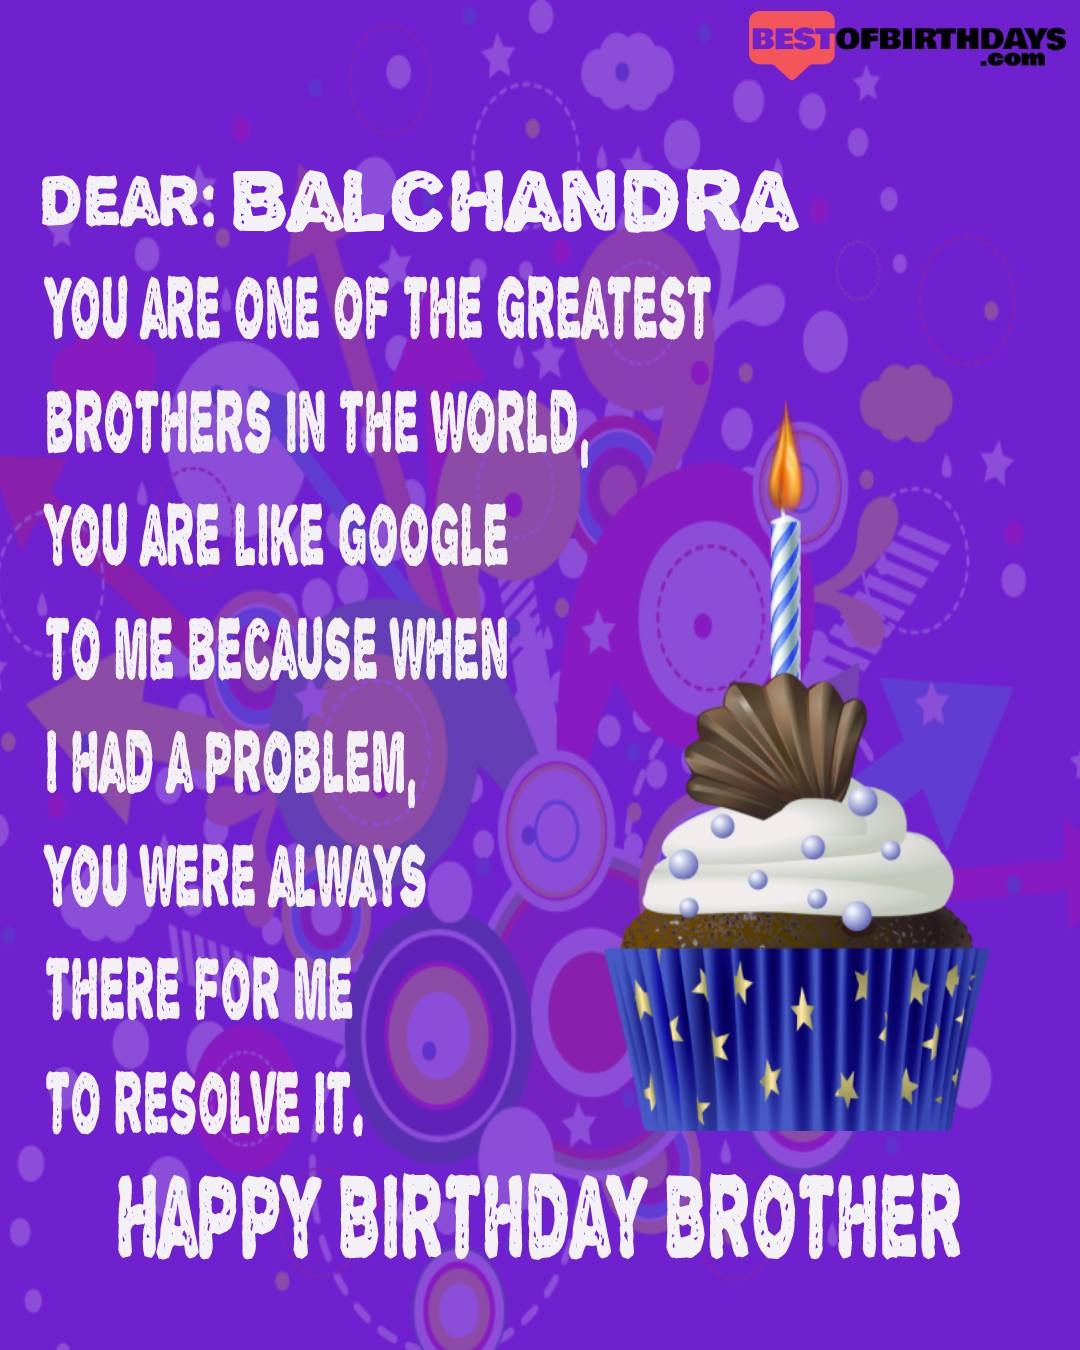 Happy birthday balchandra bhai brother bro